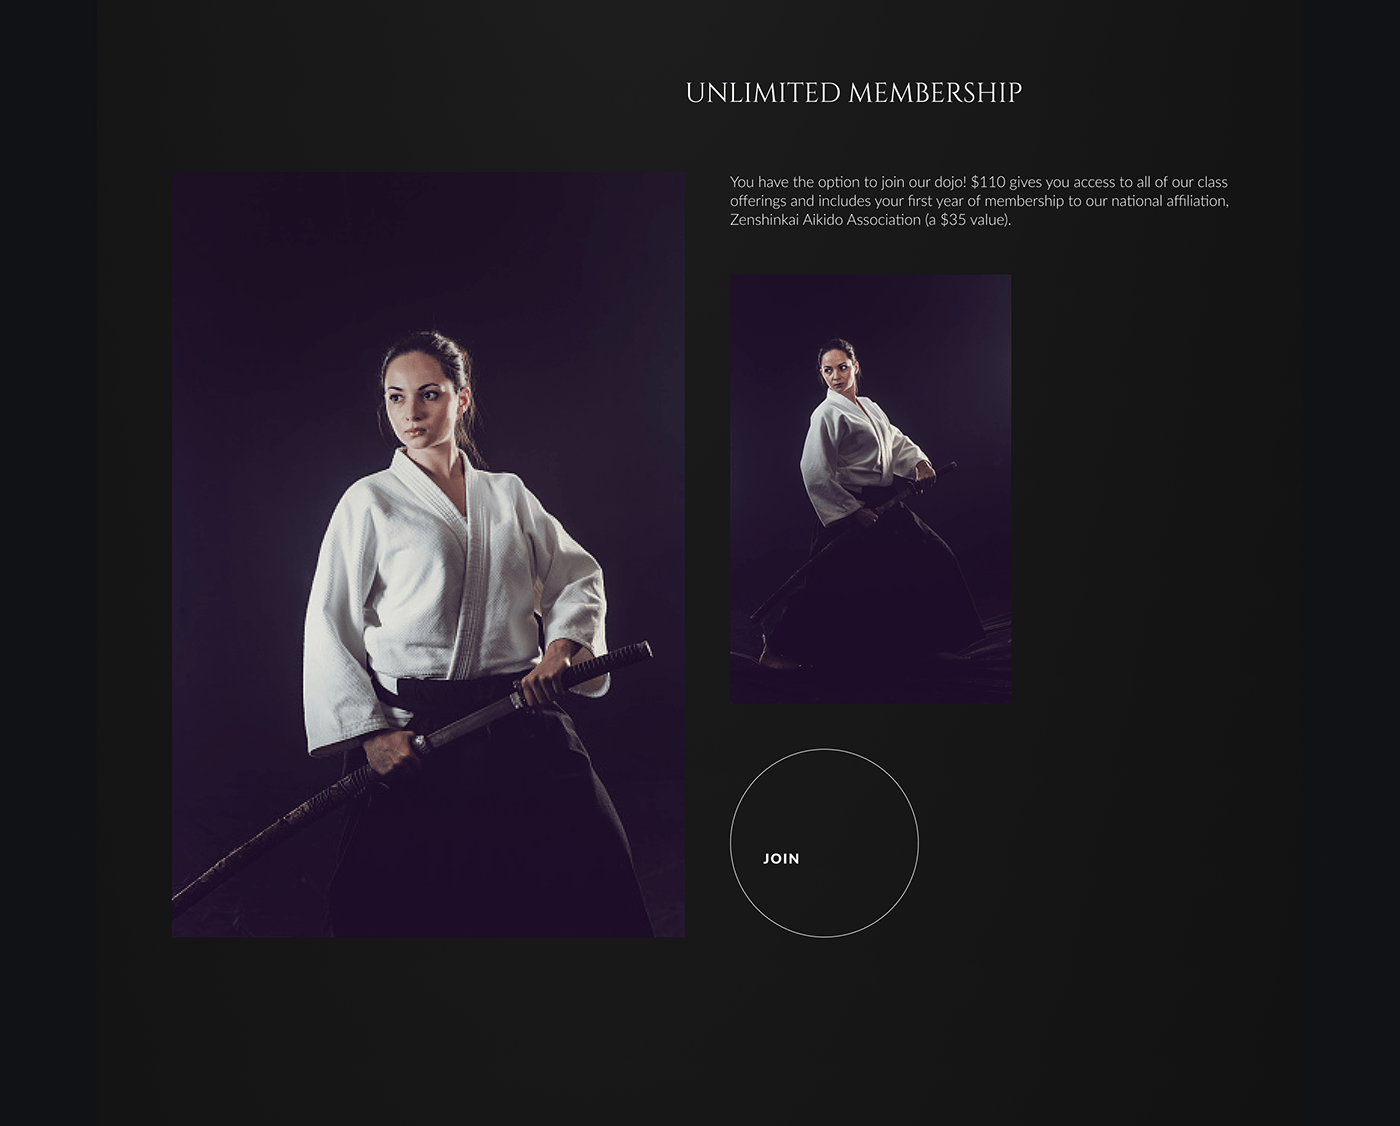 aikido classes concept design school UI ux Website